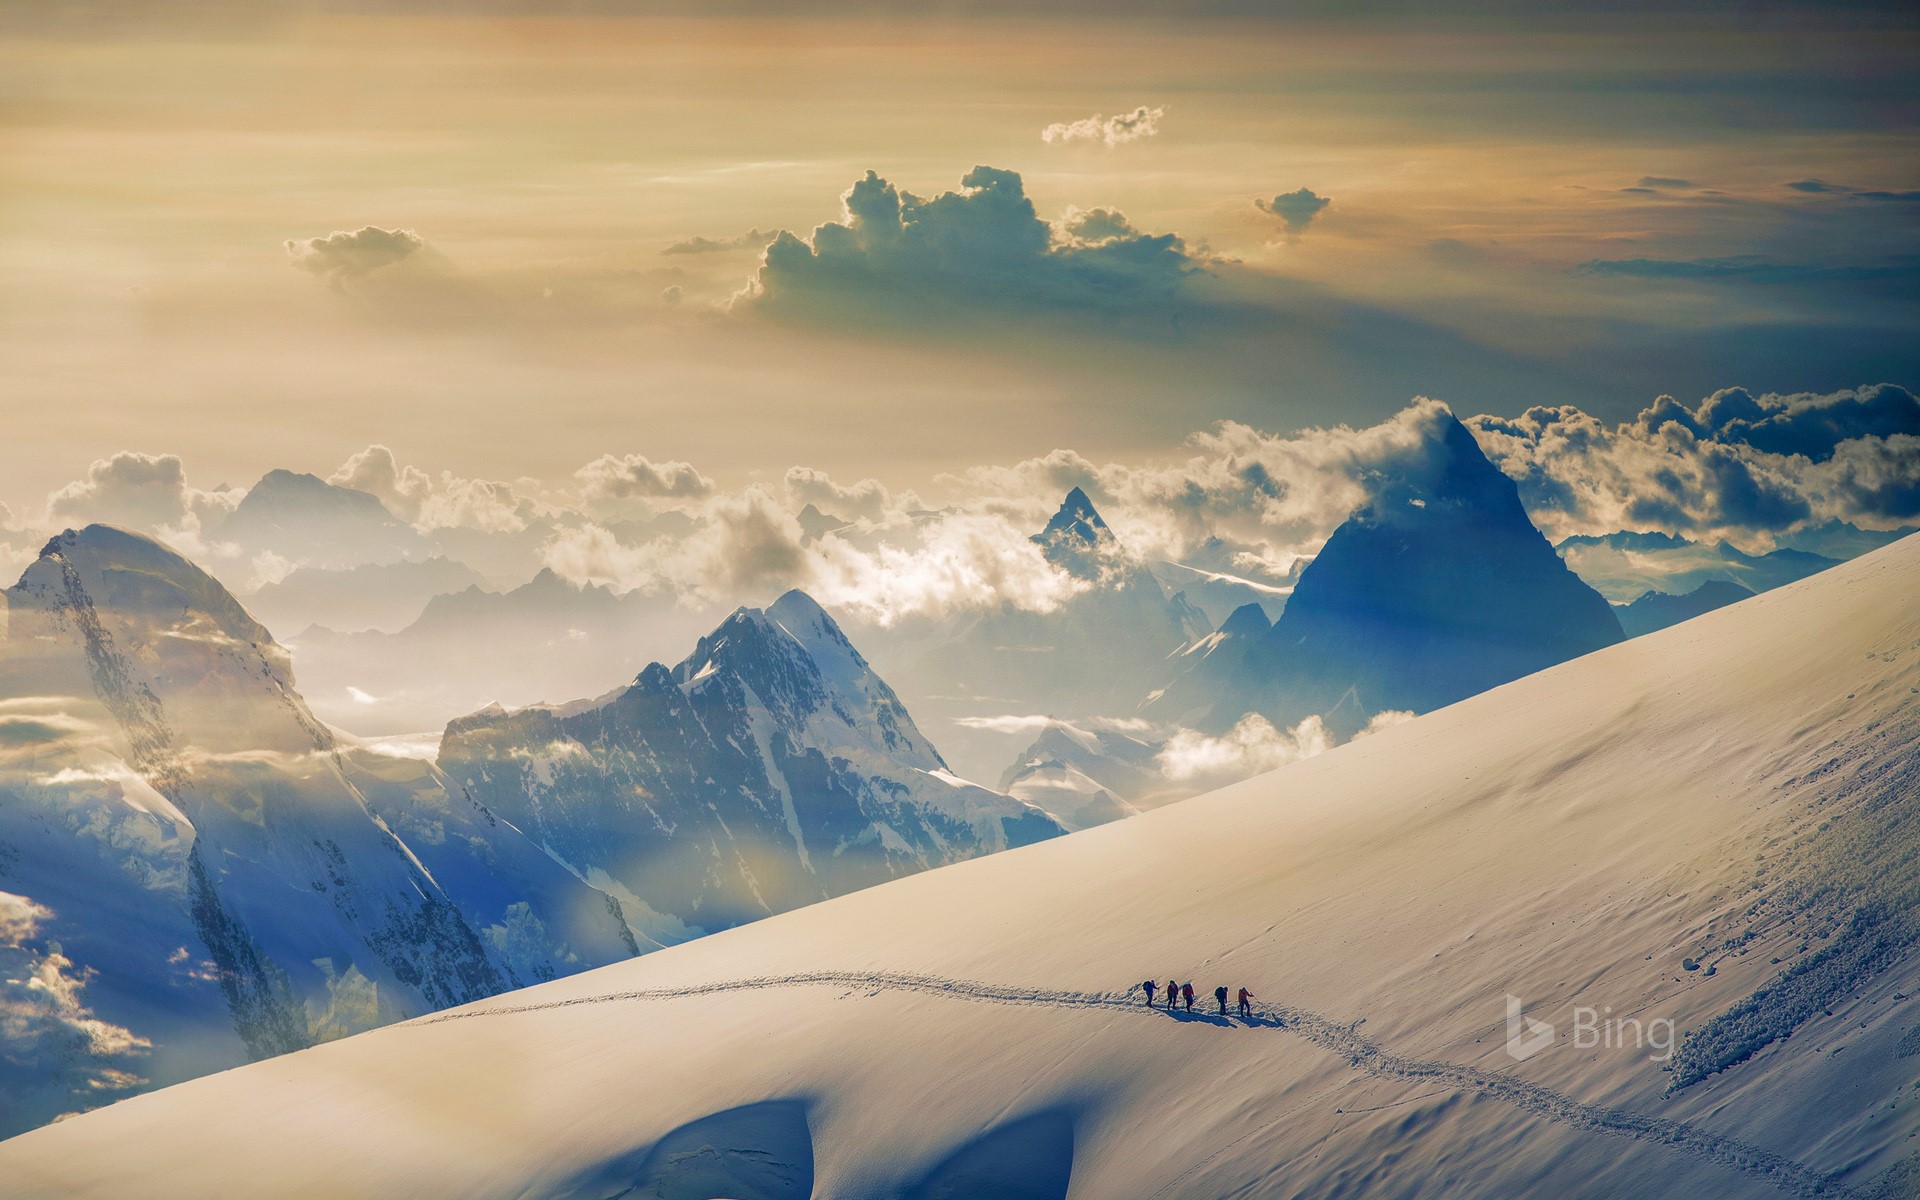 Climbers ascending Jungfrau in the Bernese Alps, Switzerland